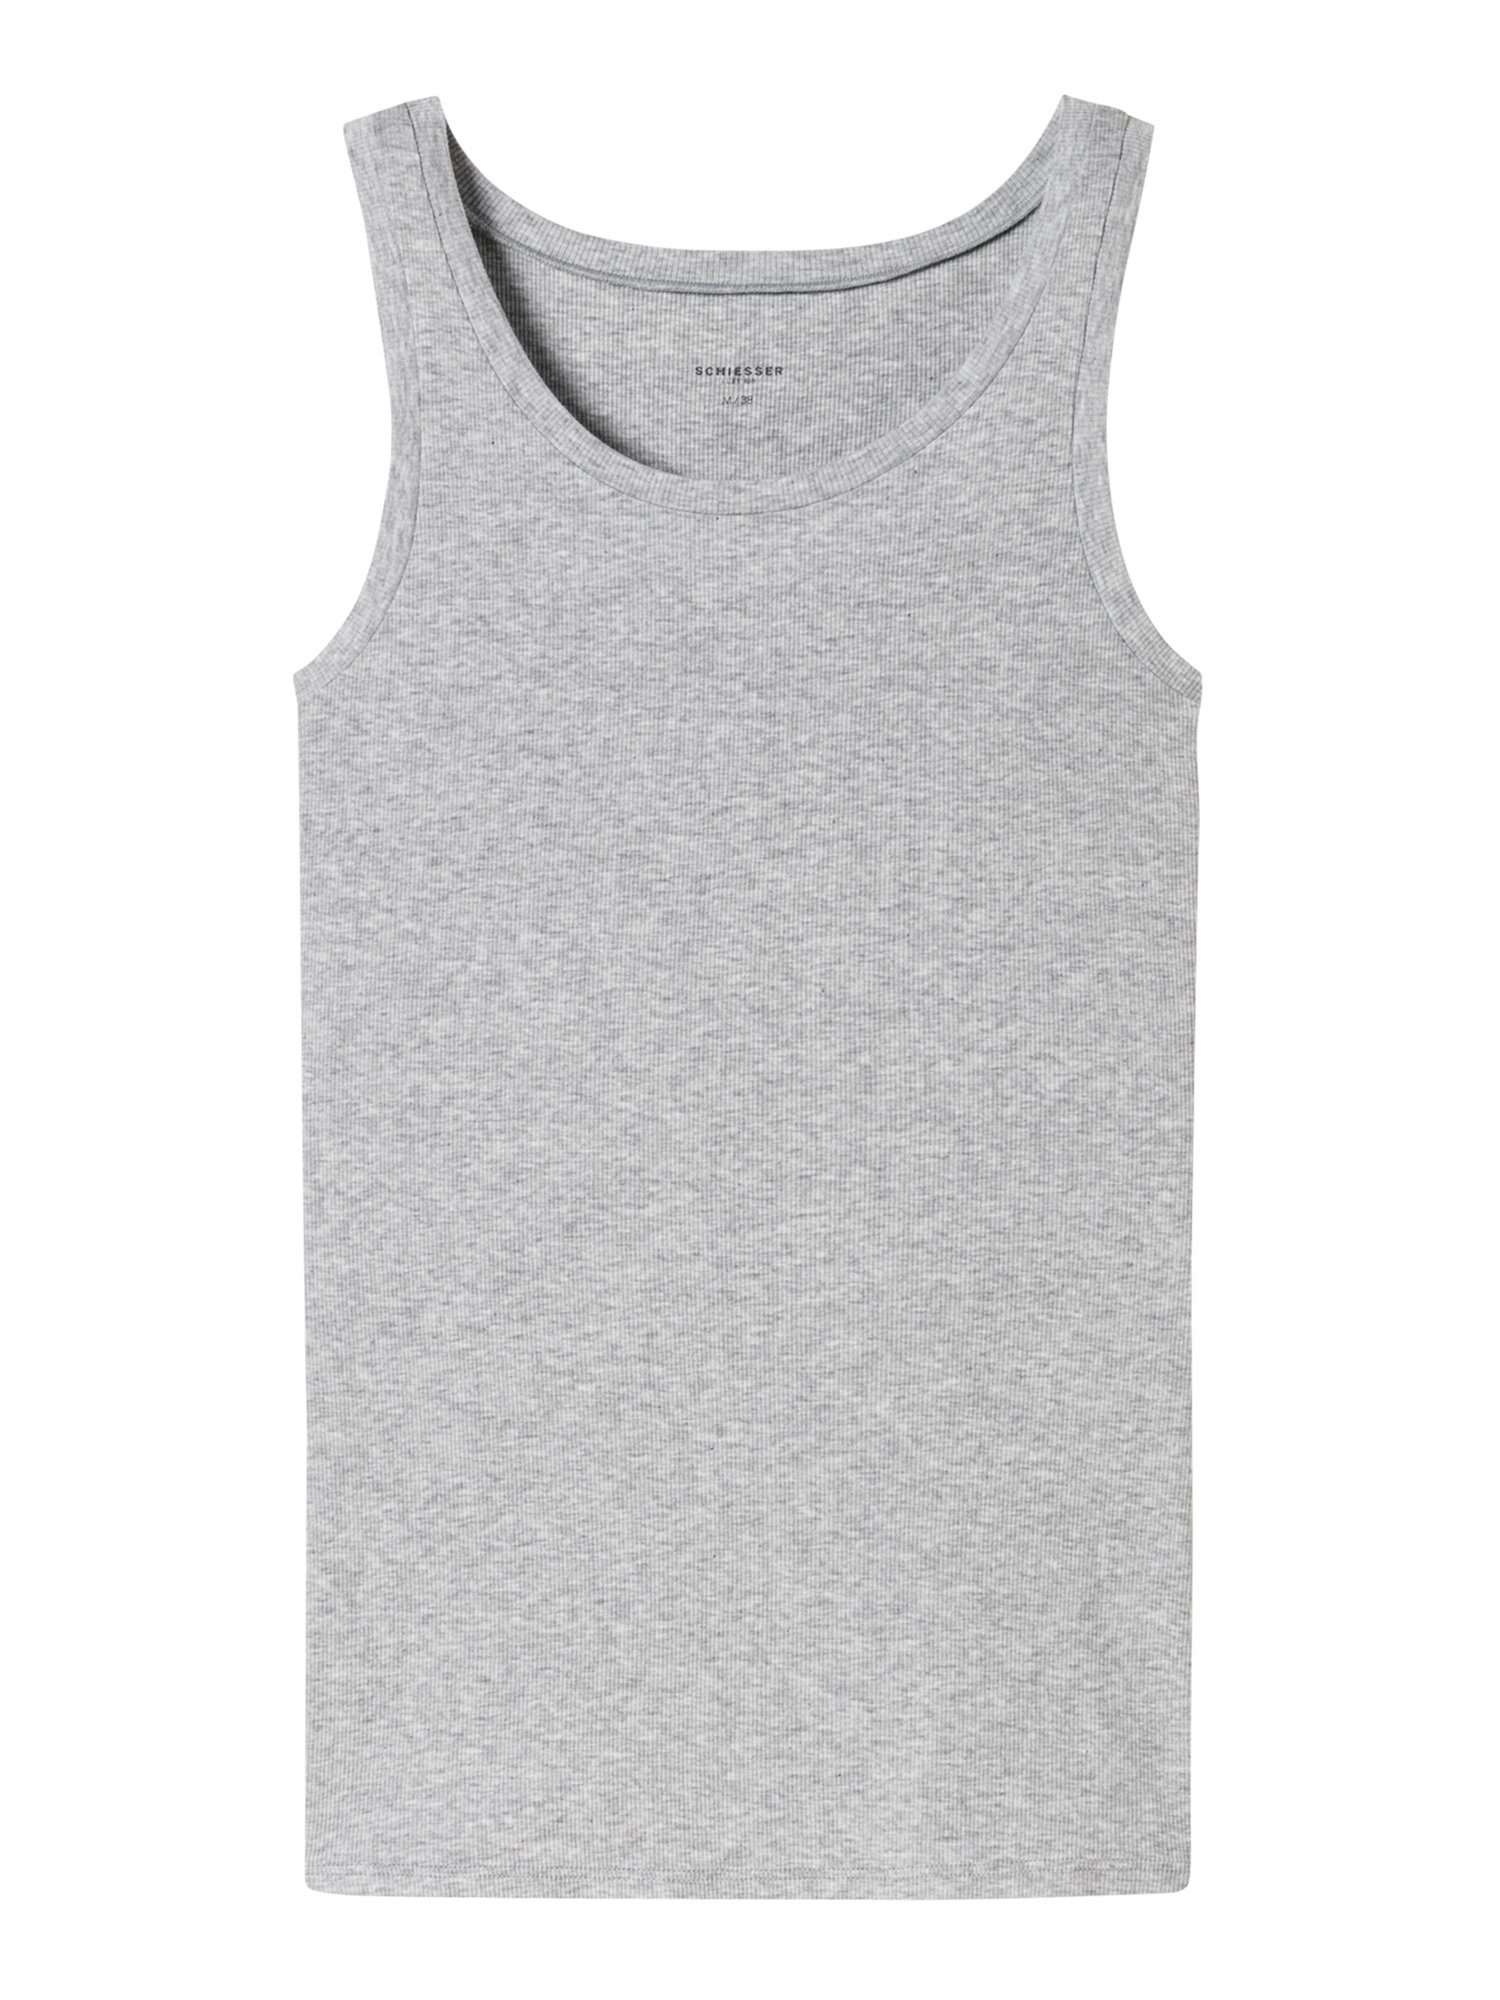 Schiesser Tanktop Pure Rib Tank-top unterhemd unterzieh-shirt grau-mel.